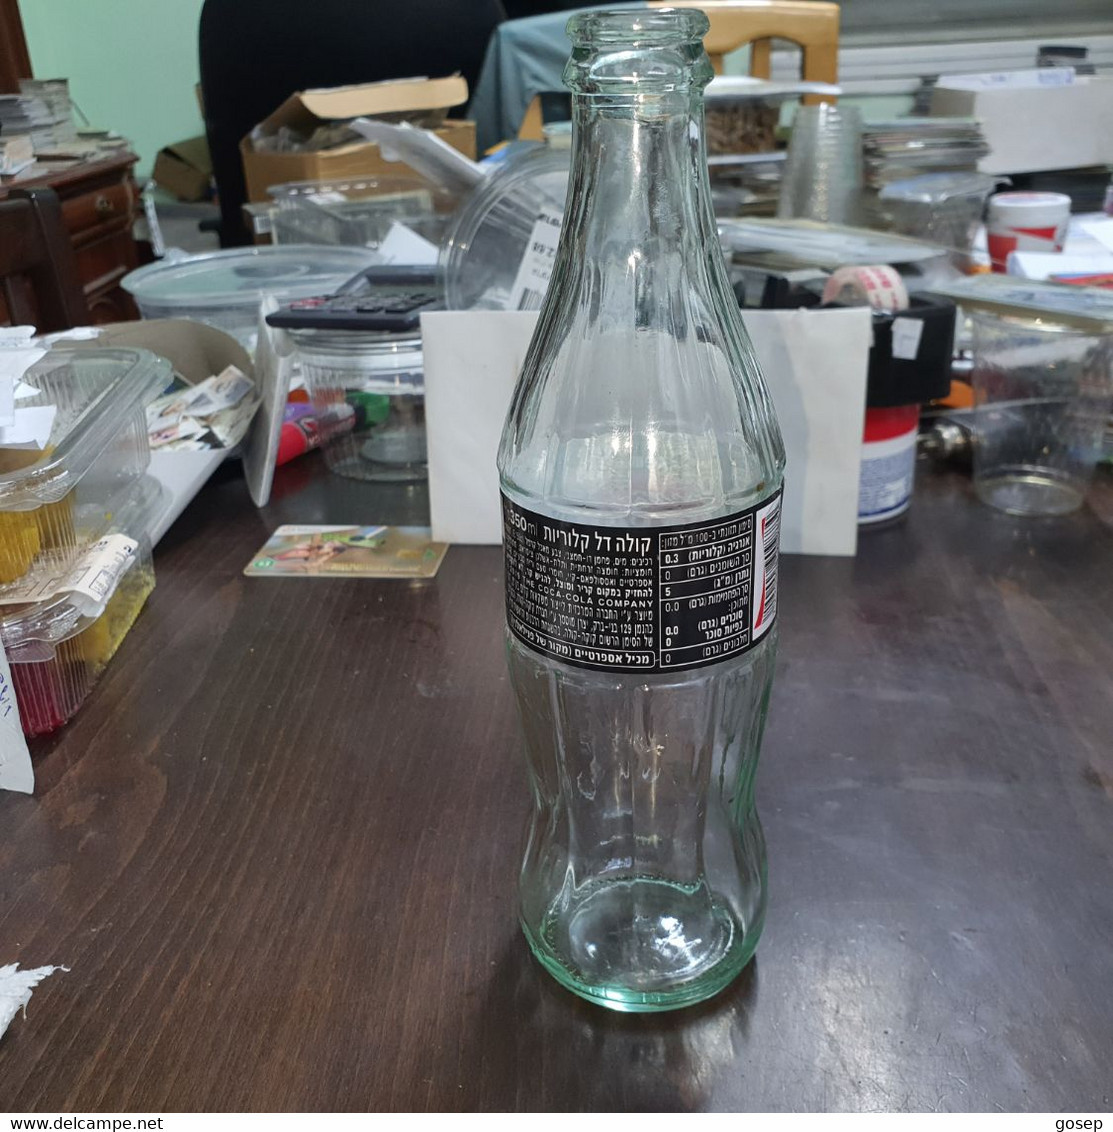 ISRAEL-COCA-COLA Zero-(350ml)+capslues(342031493294)-(glass-bottle)-used - Flaschen